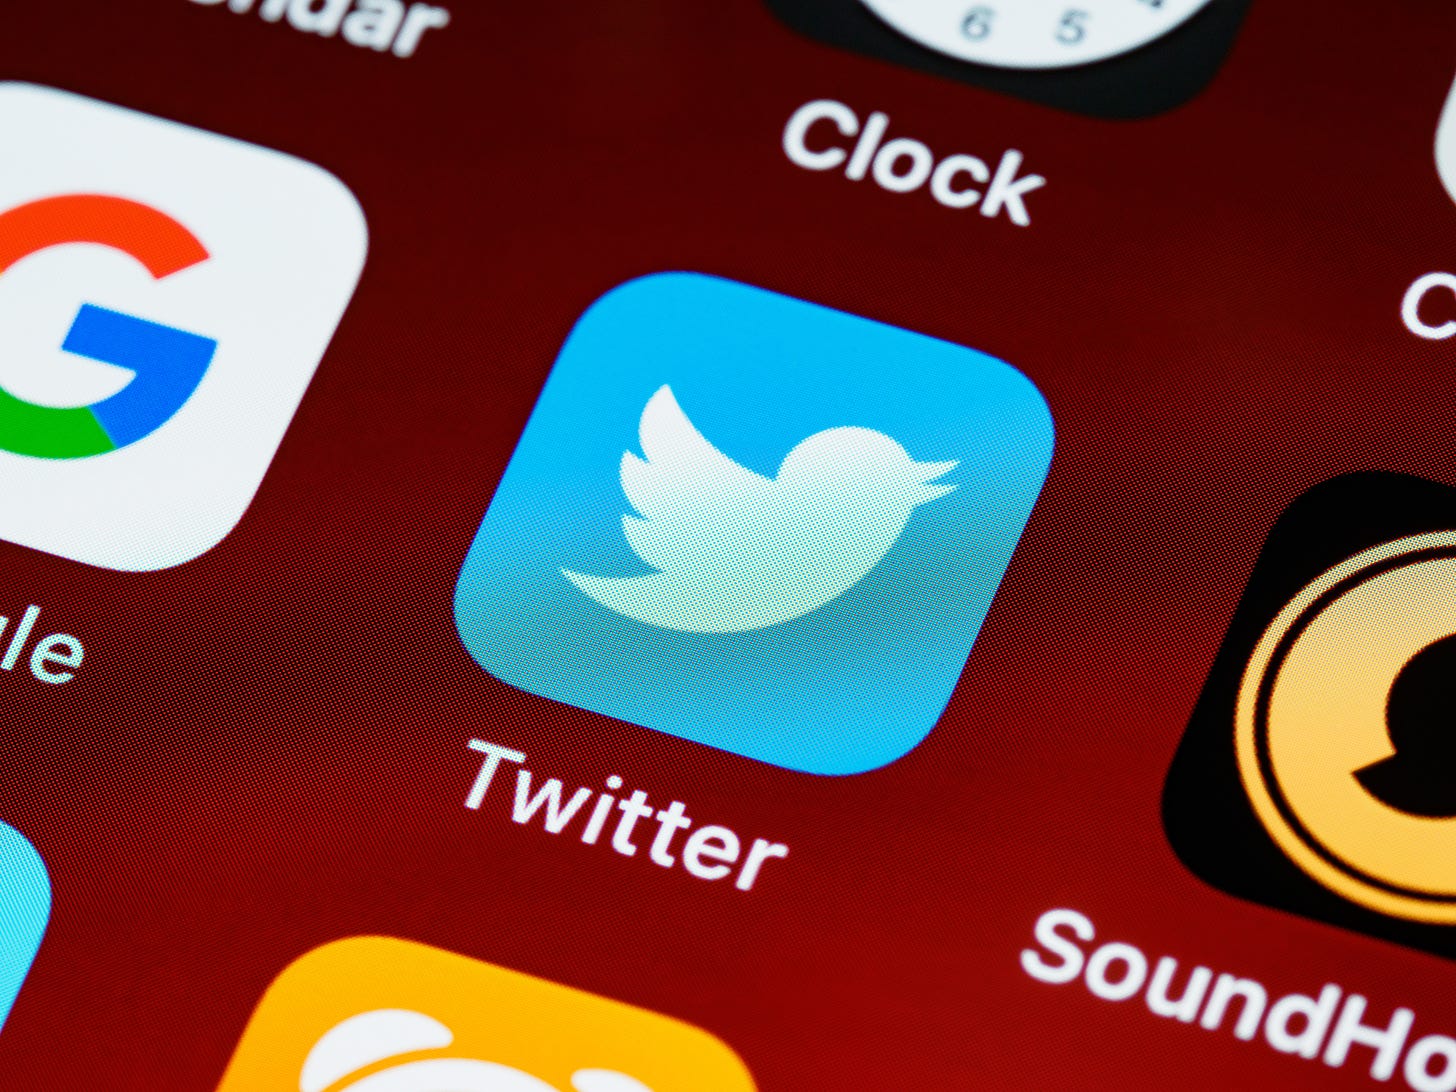 Twitter app logo on phone screen